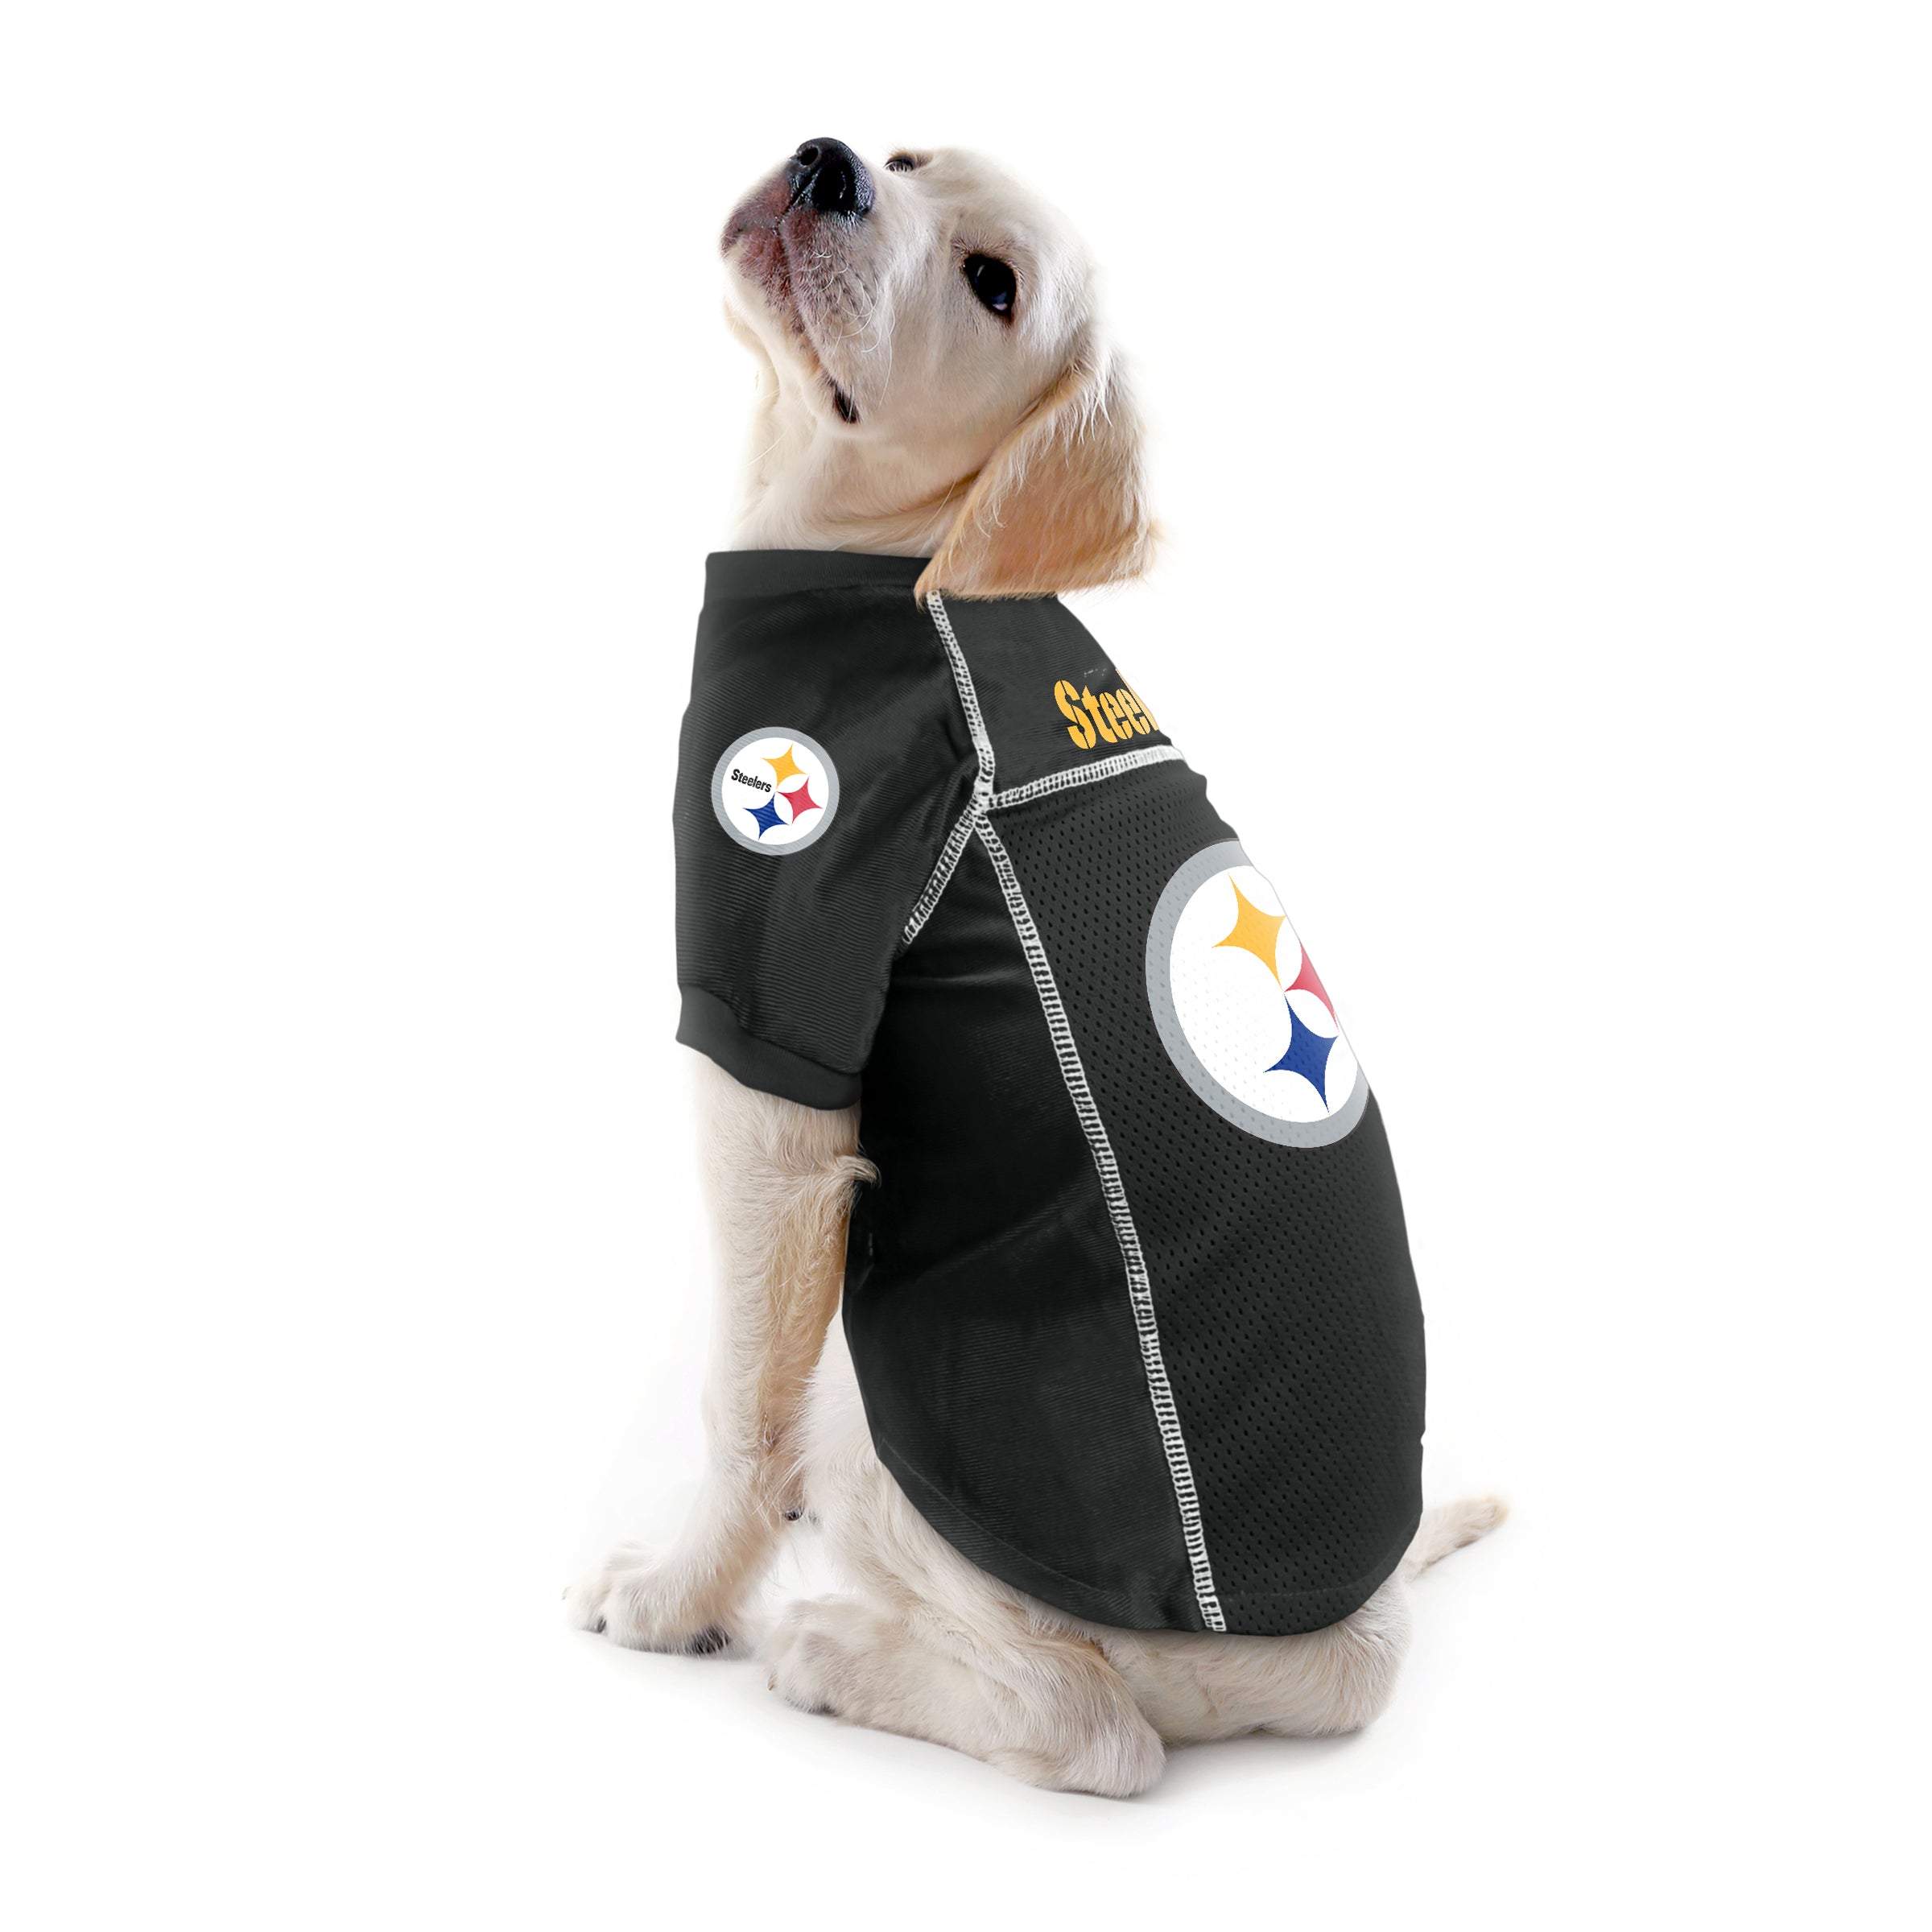 Pittsburgh Steelers Pet Stretch Jersey - Big Dog